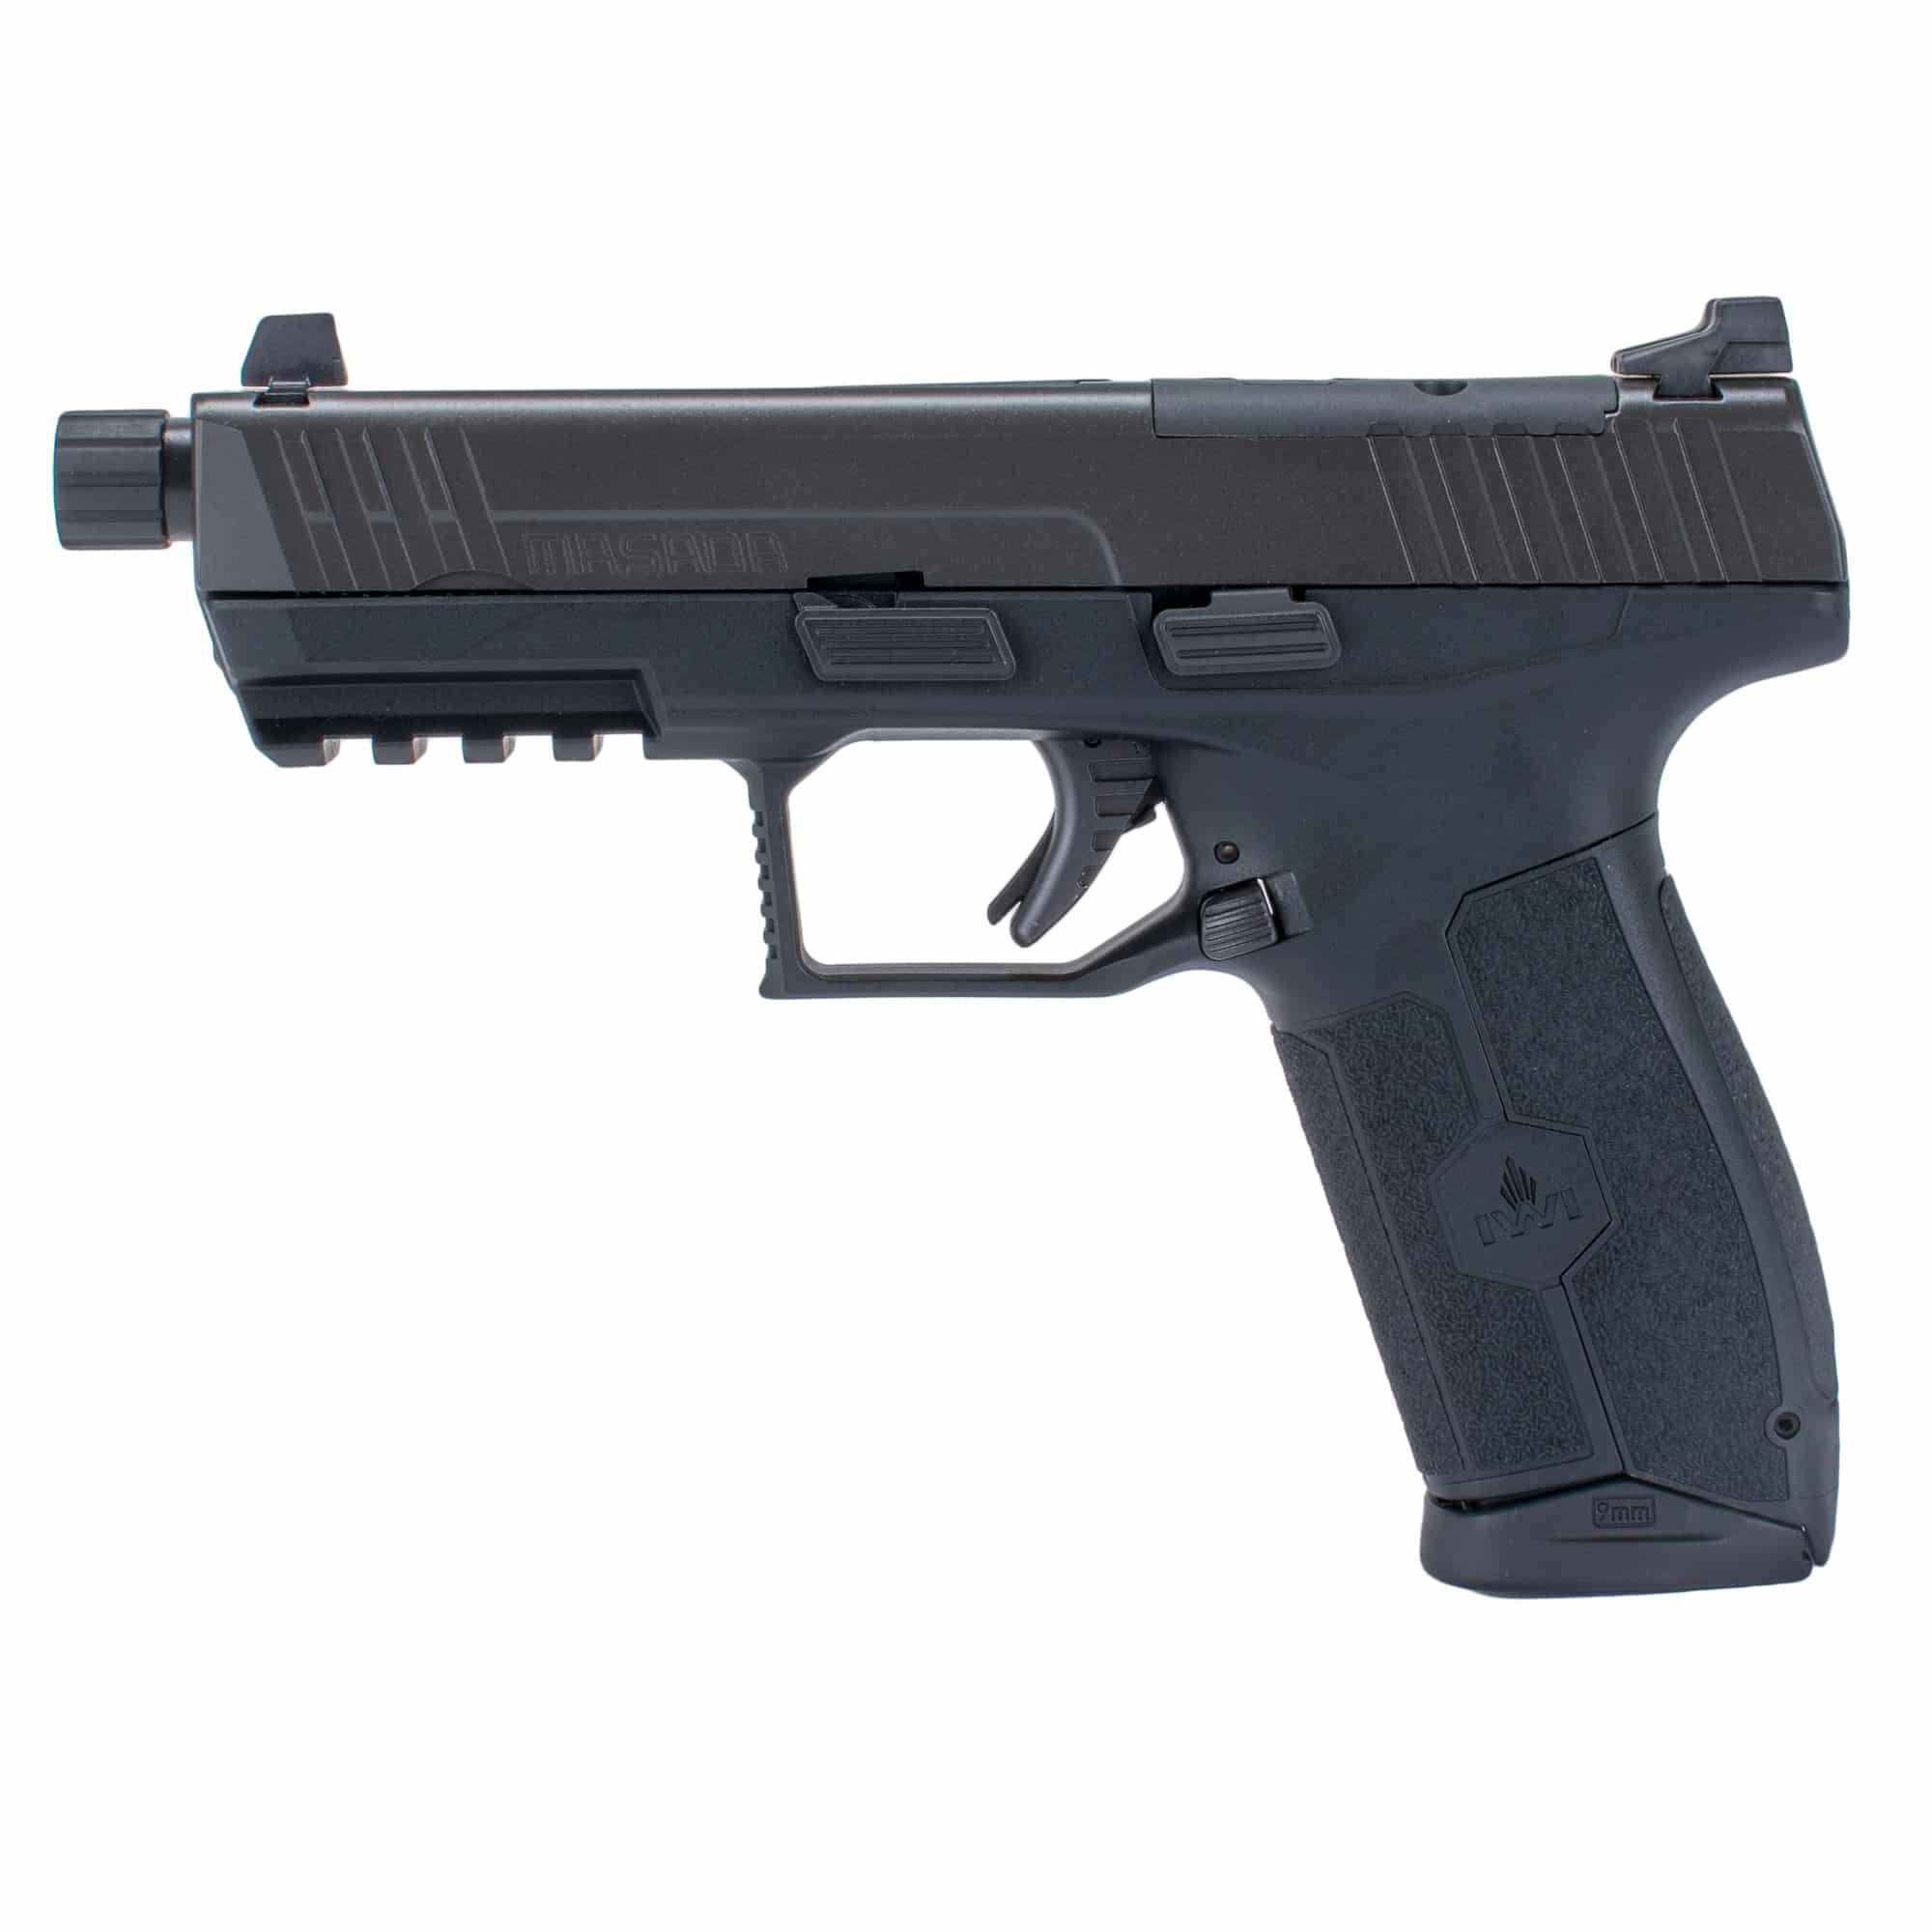 https://cityarsenal.com/product/iwi-us-inc-masada-optics-ready-polymer-frame-pistol-full-size-9mm-4-6-barrel-black-m9orp17t/